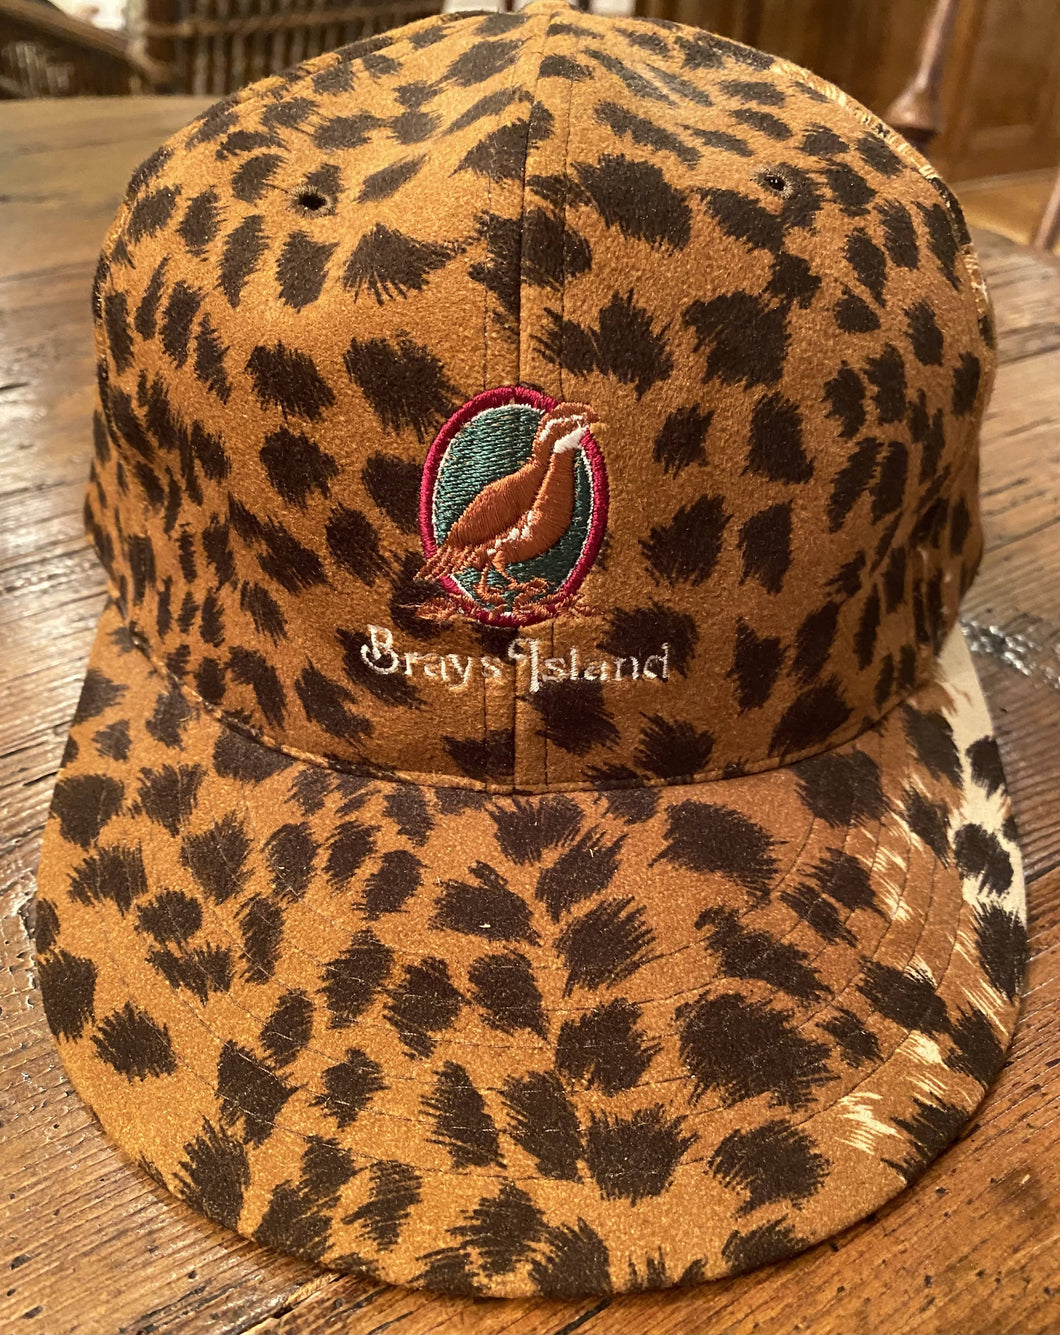 Bray’s Island Safari Cap